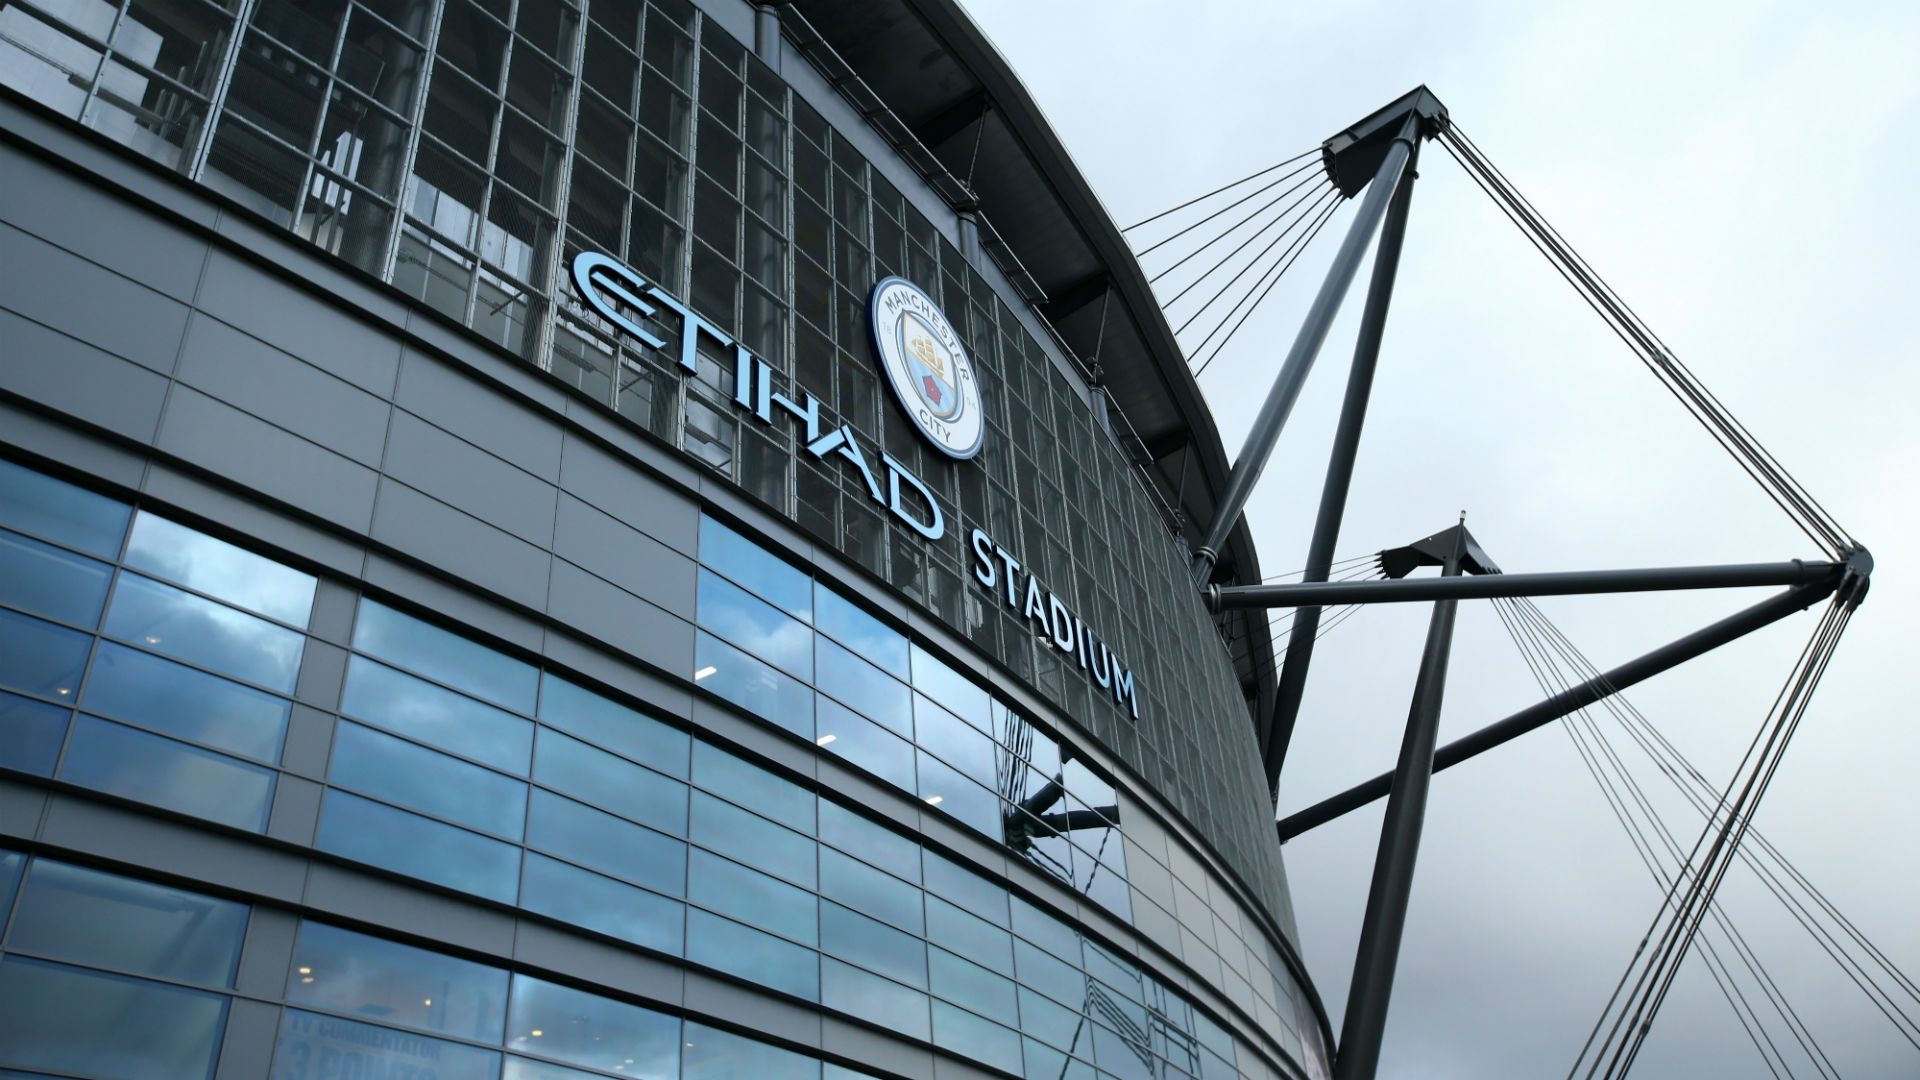 Manchester City S Etihad Stadium - Etihad Stadium - HD Wallpaper 